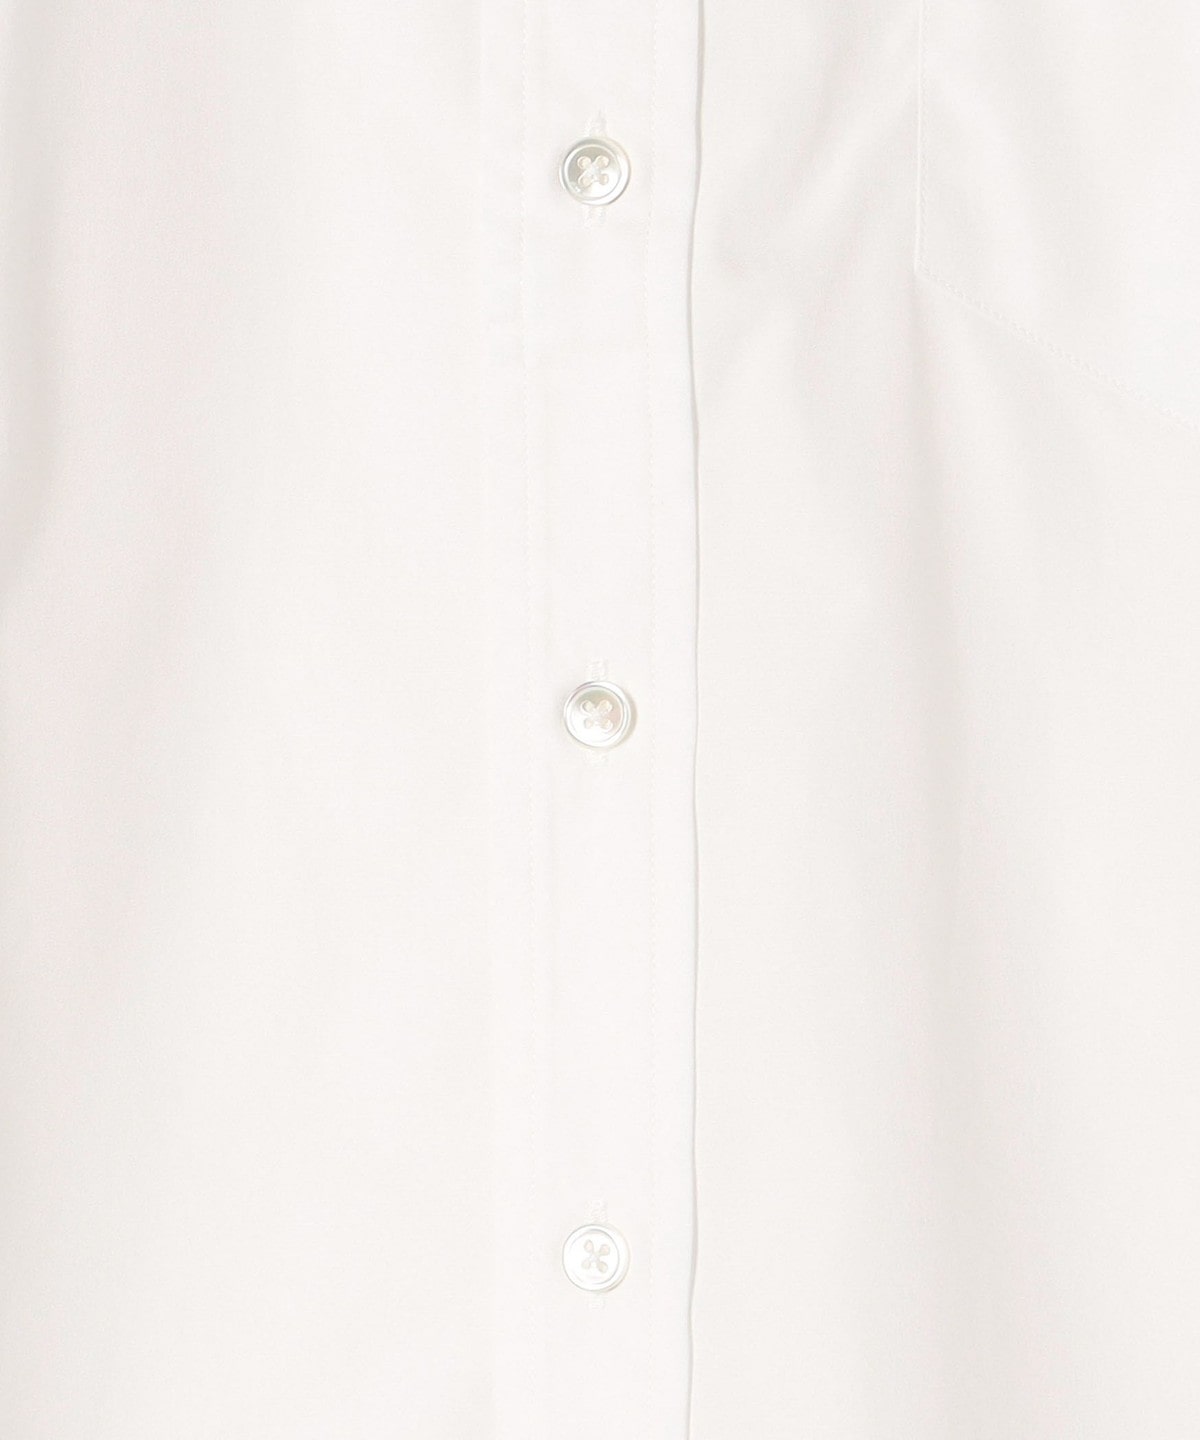 Ernie Palo standard shirt 白　シャツ